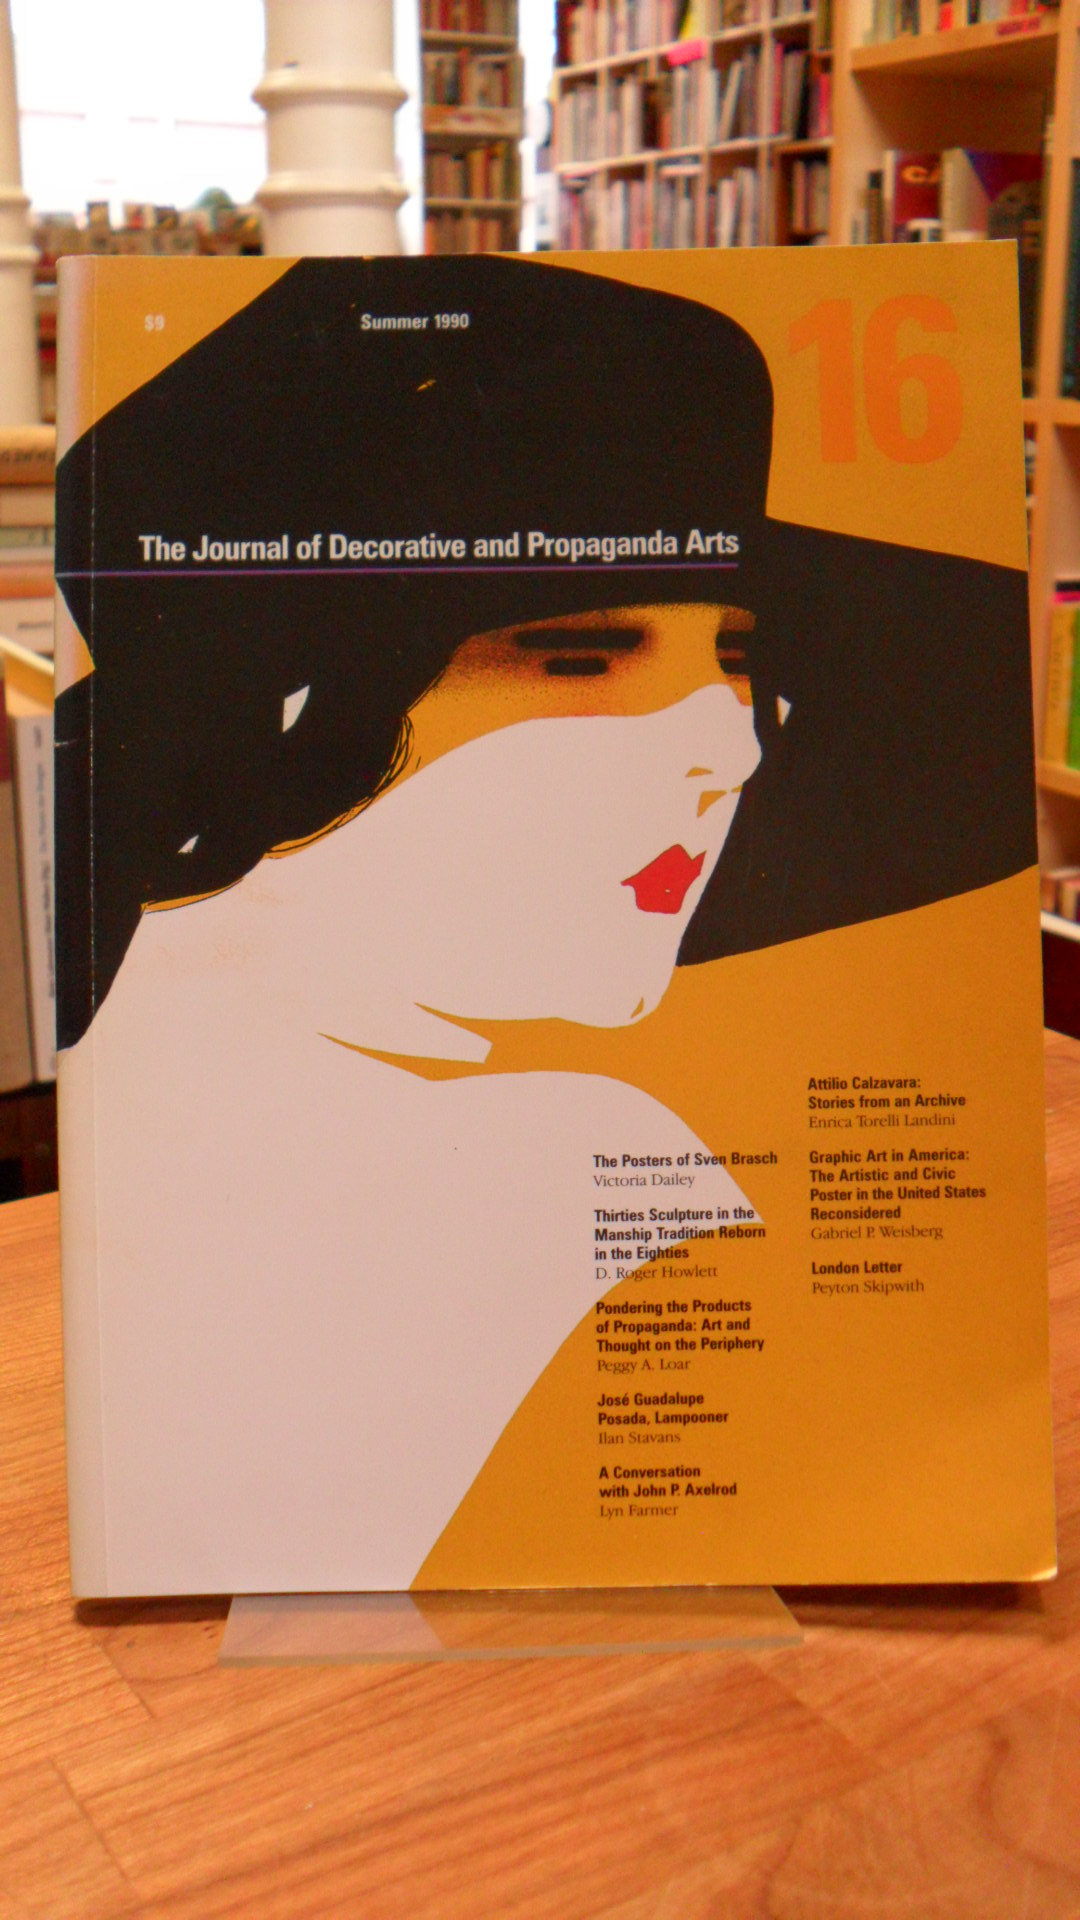 Edited by Pamela Johnson. The Journal of Decorative Propaganda Arts – Summer 199